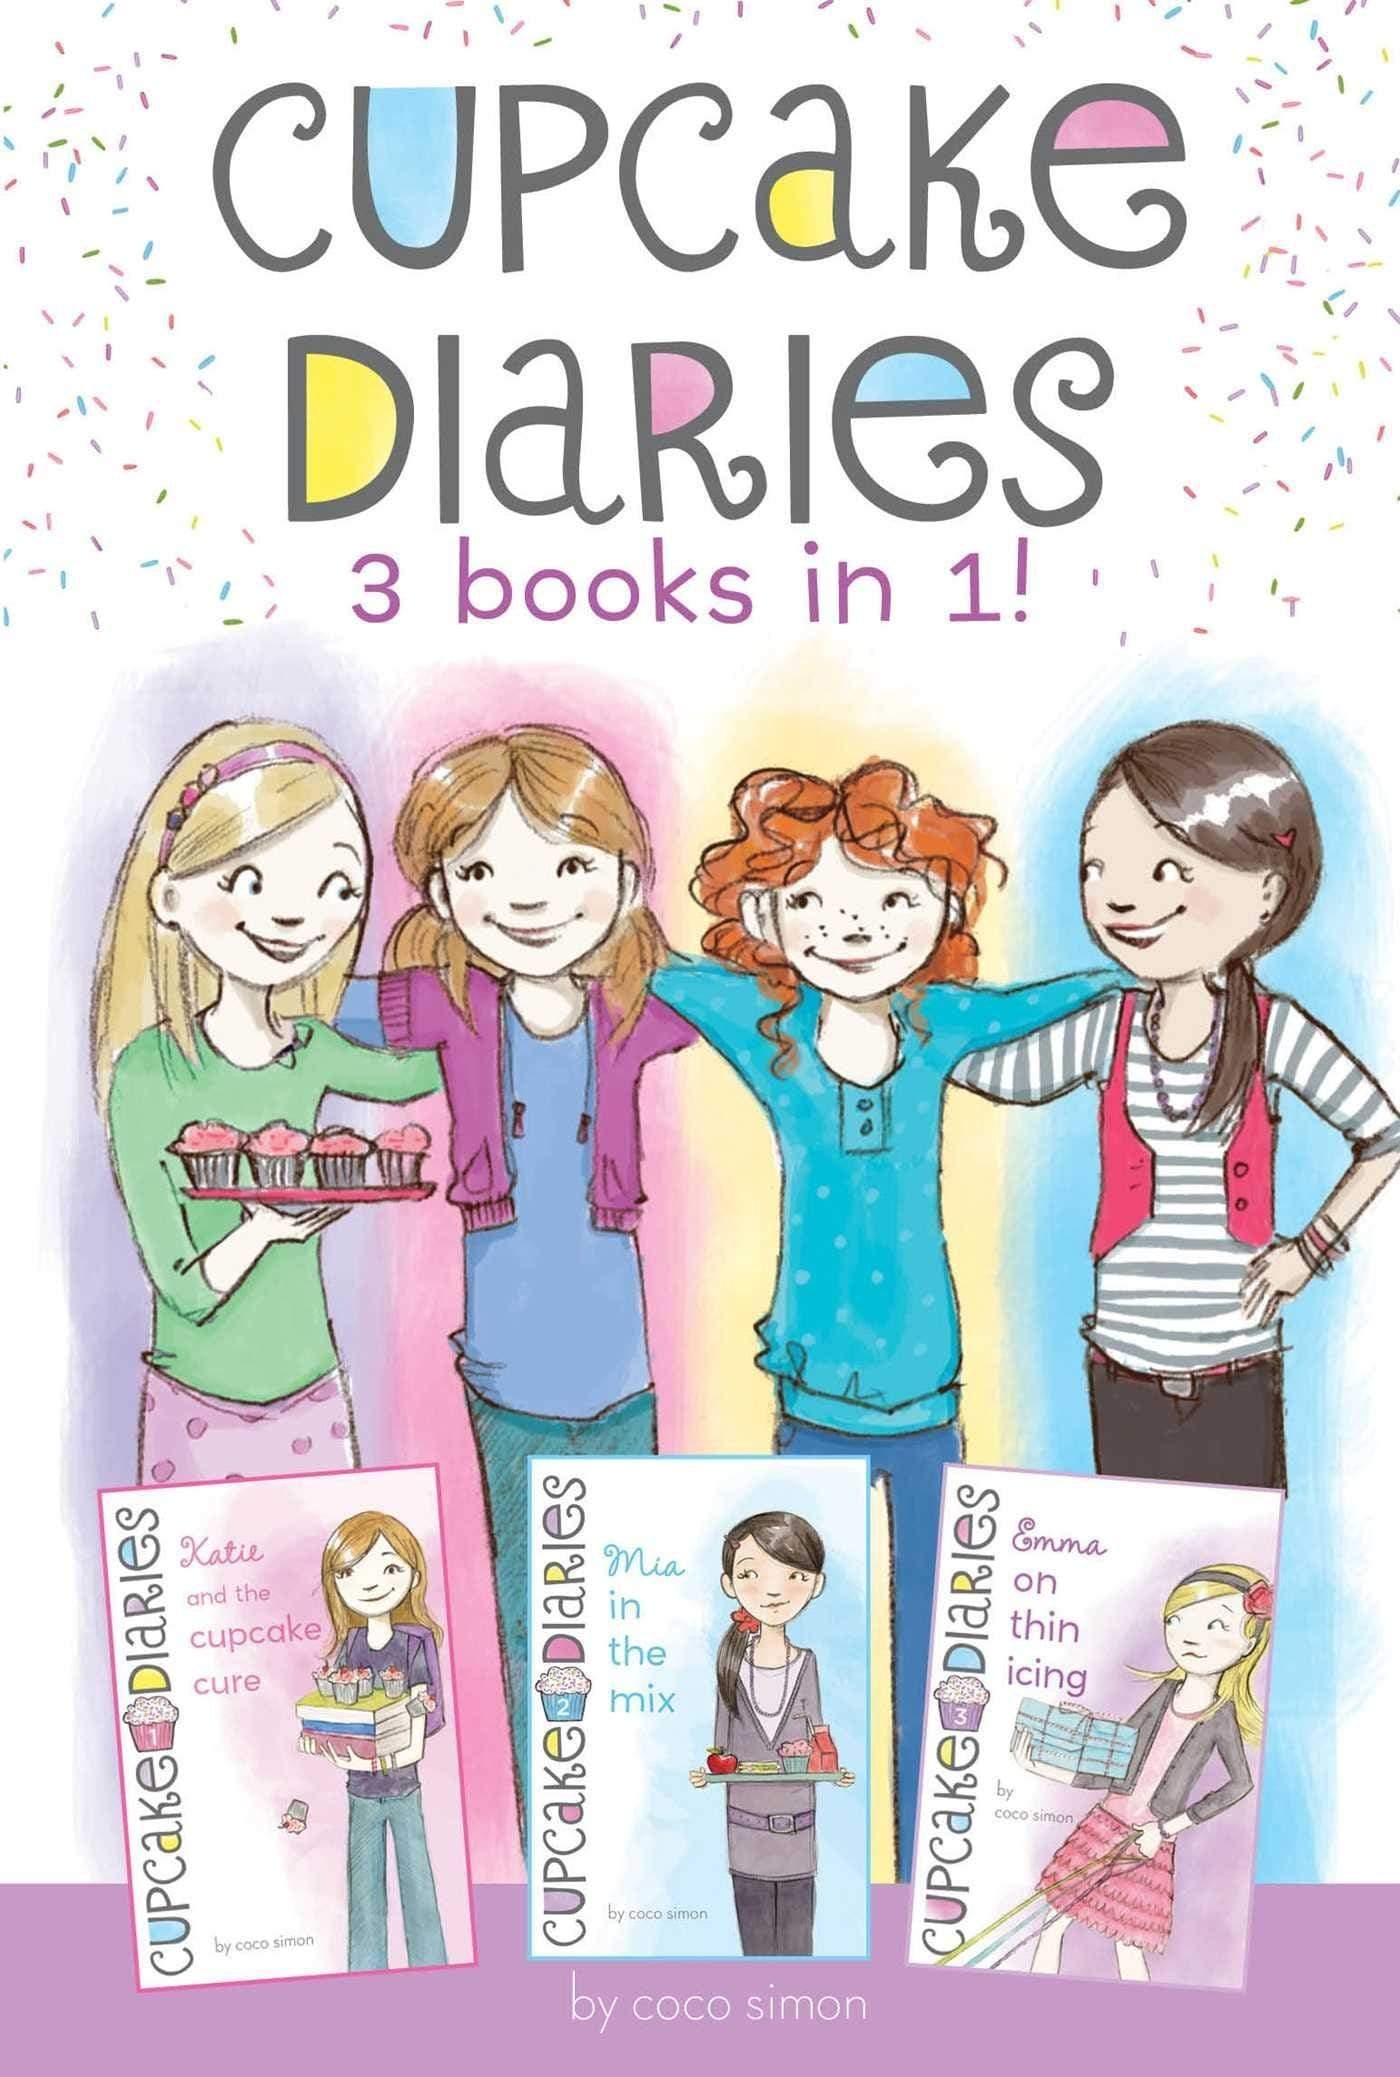 Cupcakes Diaries 3 Books In 1!